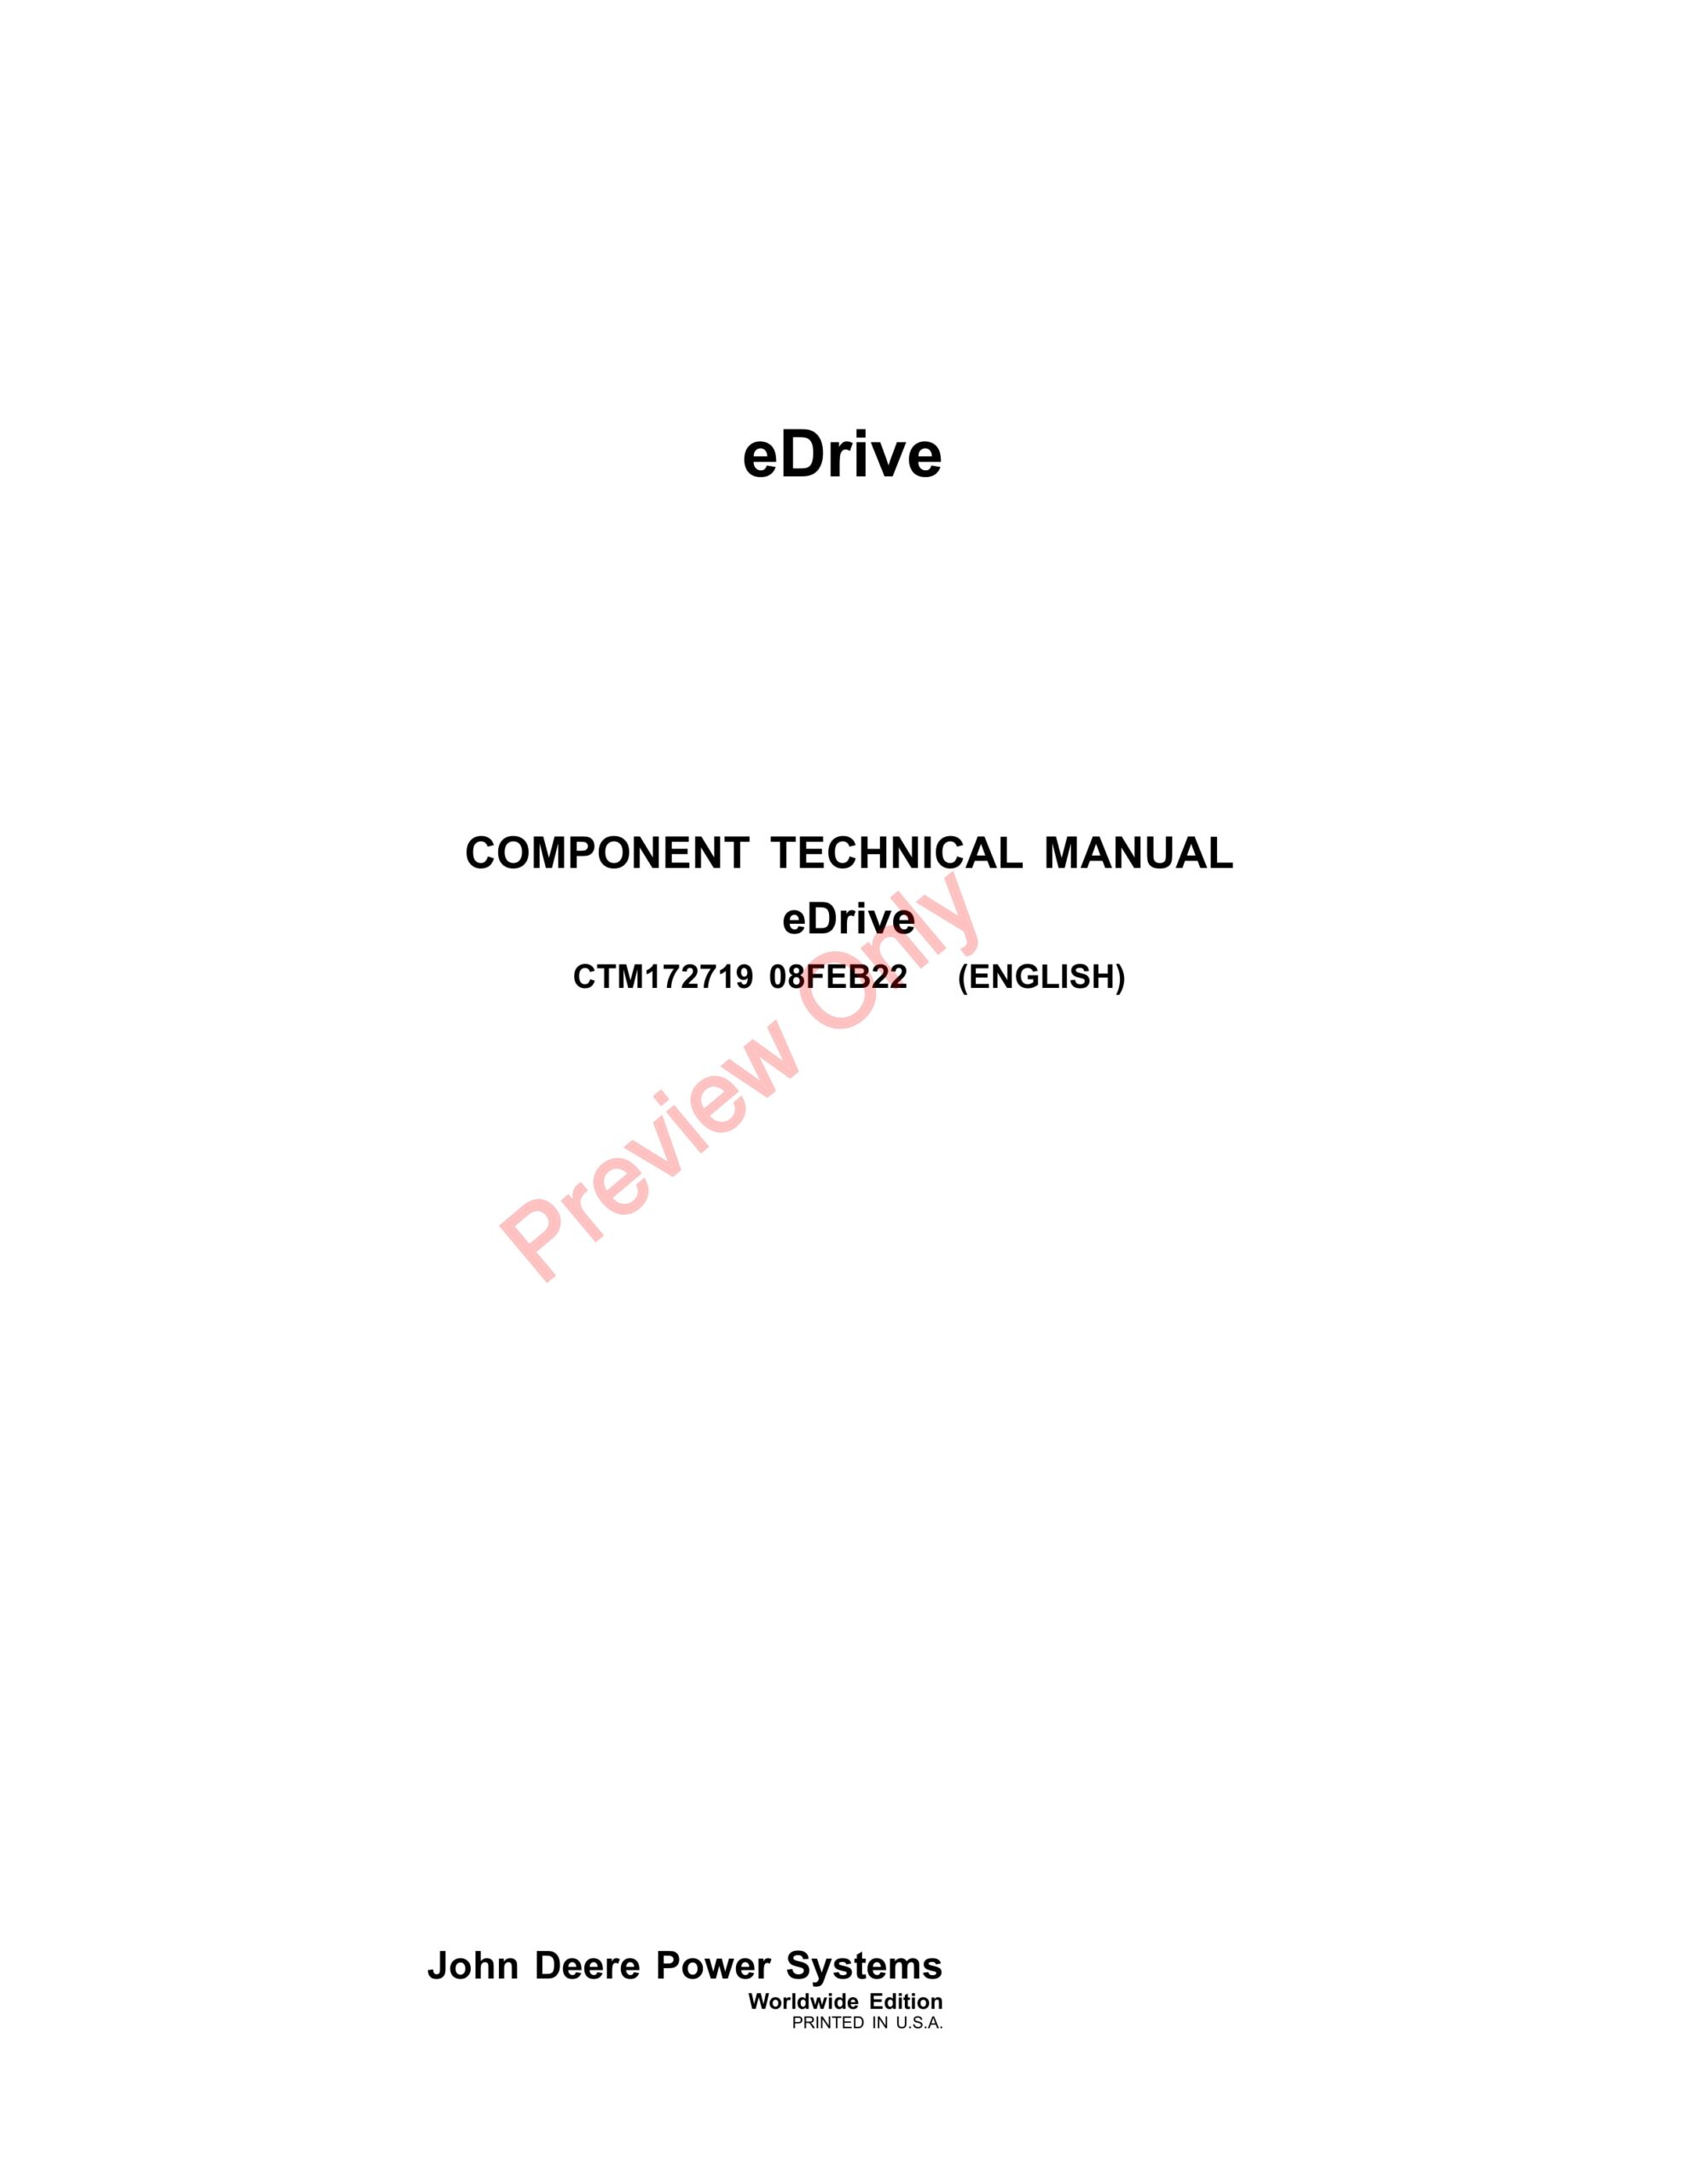 John Deere eDrive Component Technical Manual CTM172719 08FEB22-1